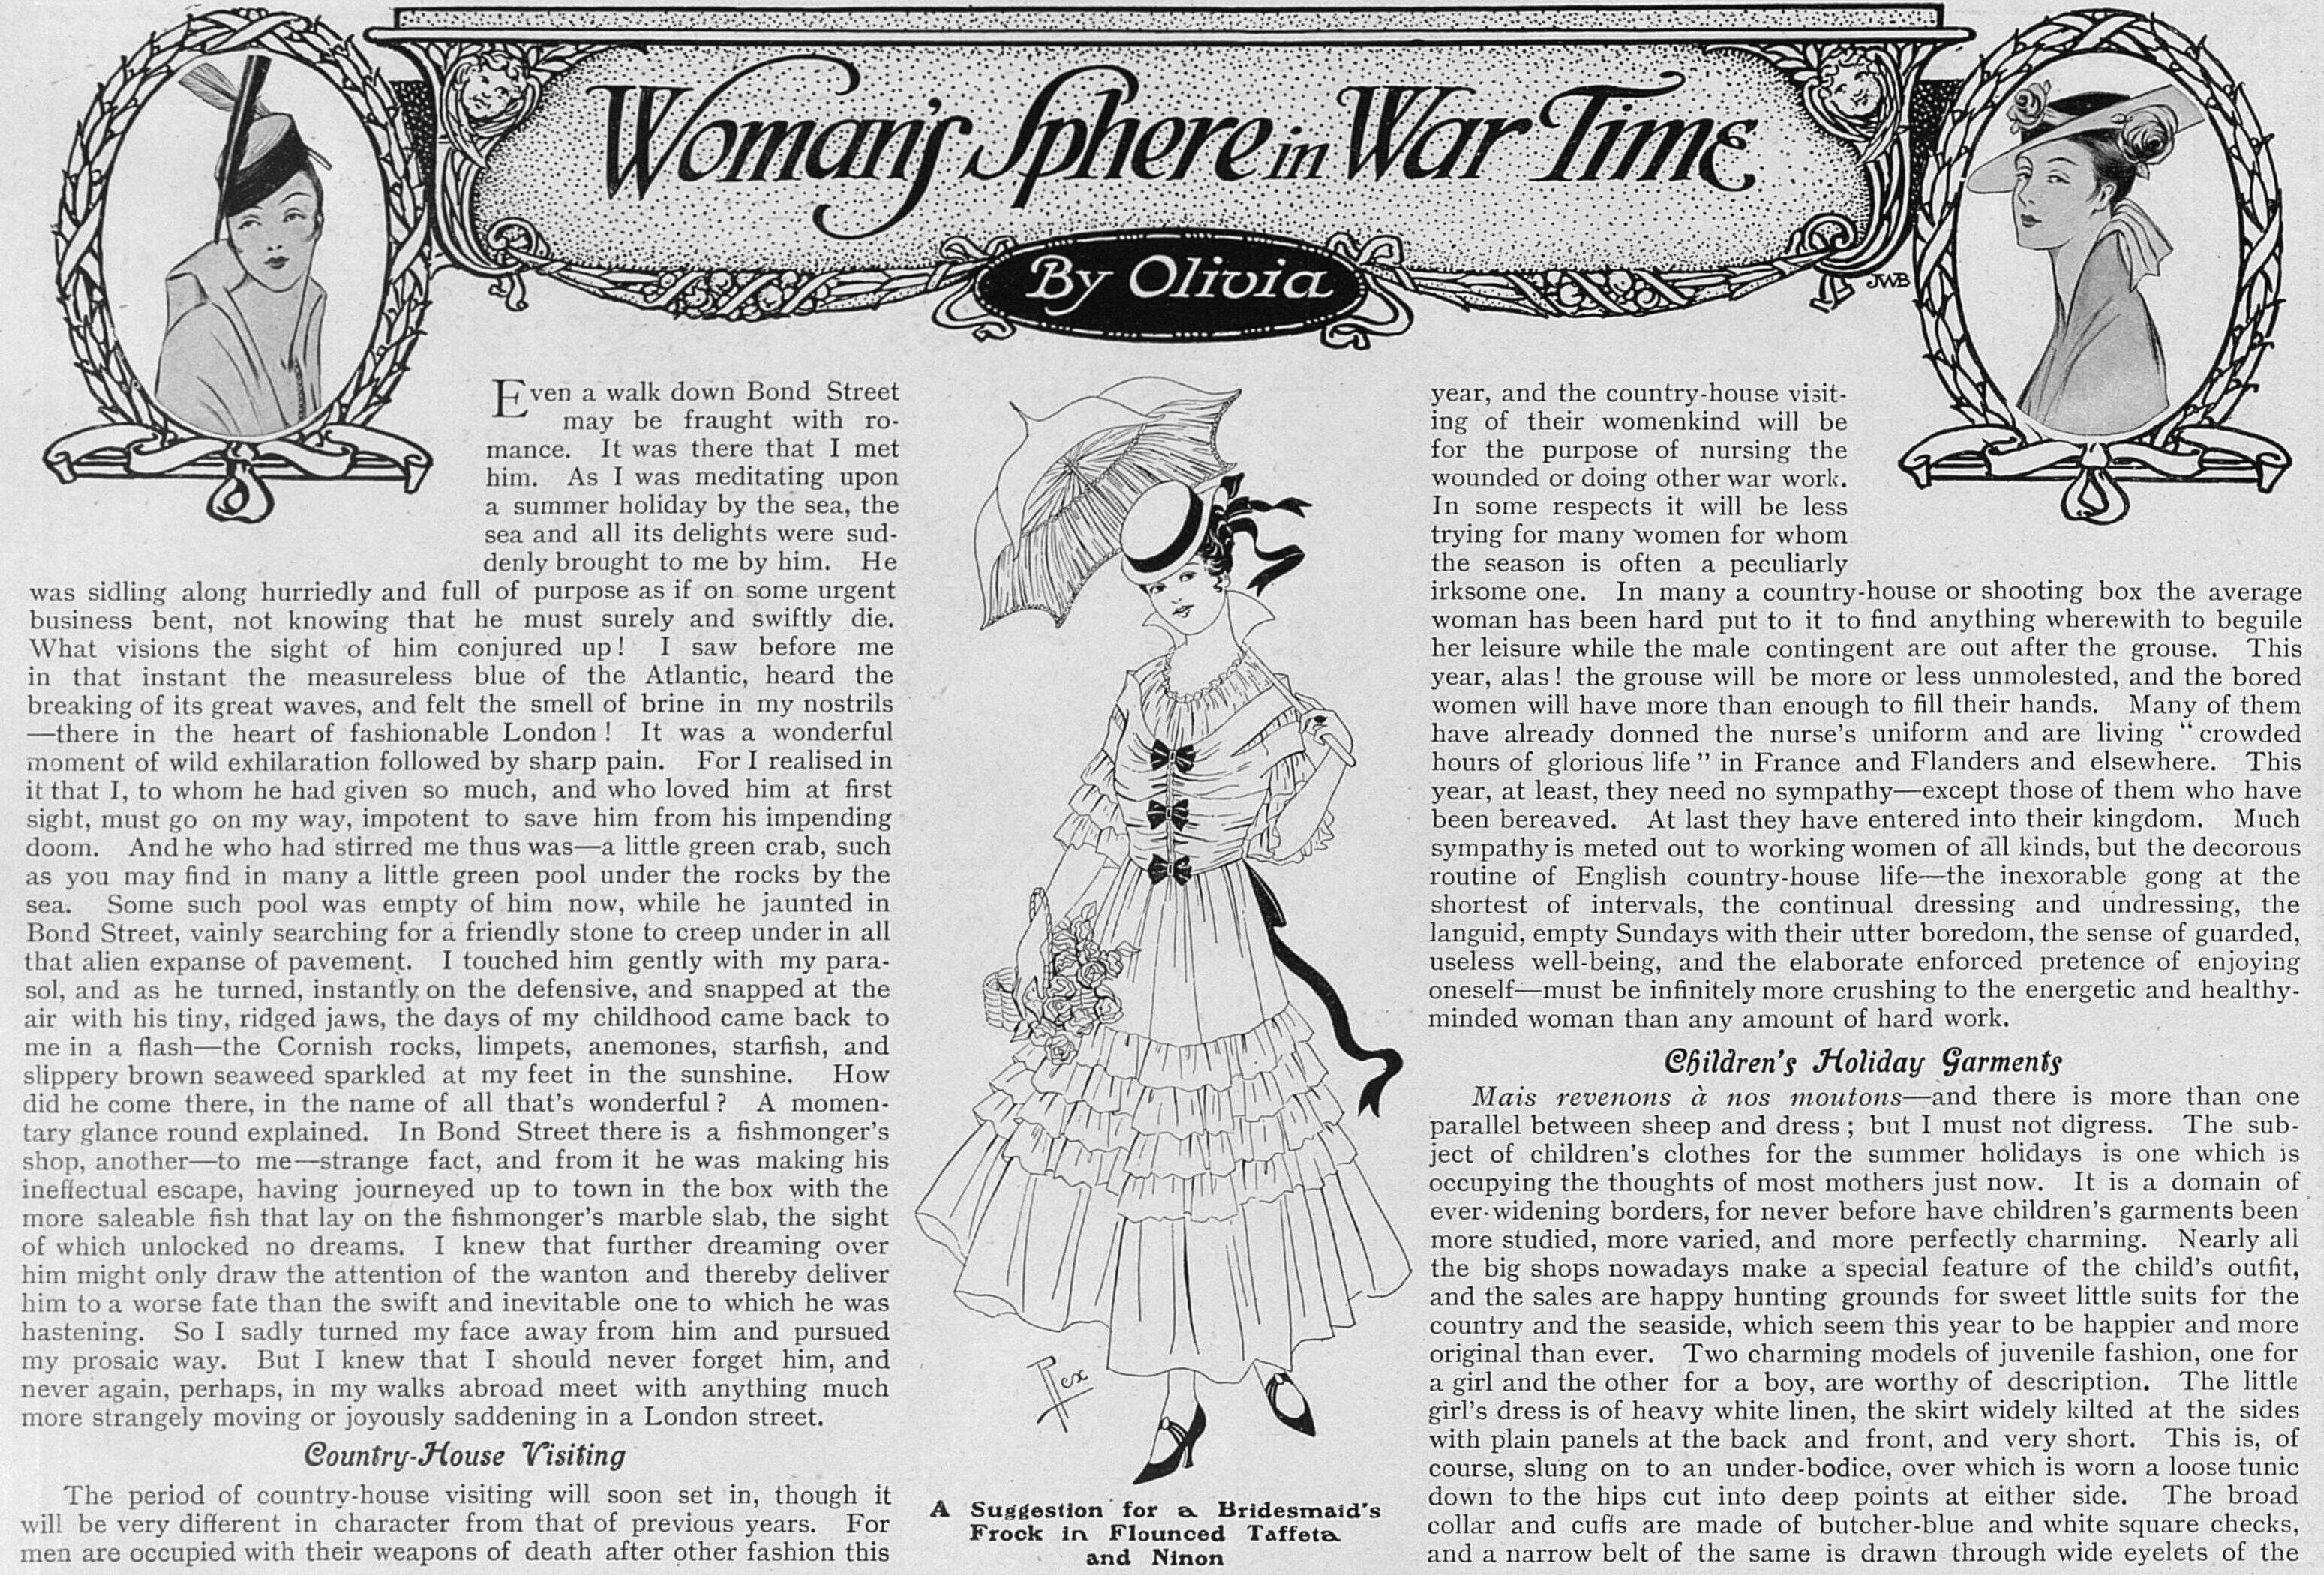 WomansSphereInWarTime_24Jul1915